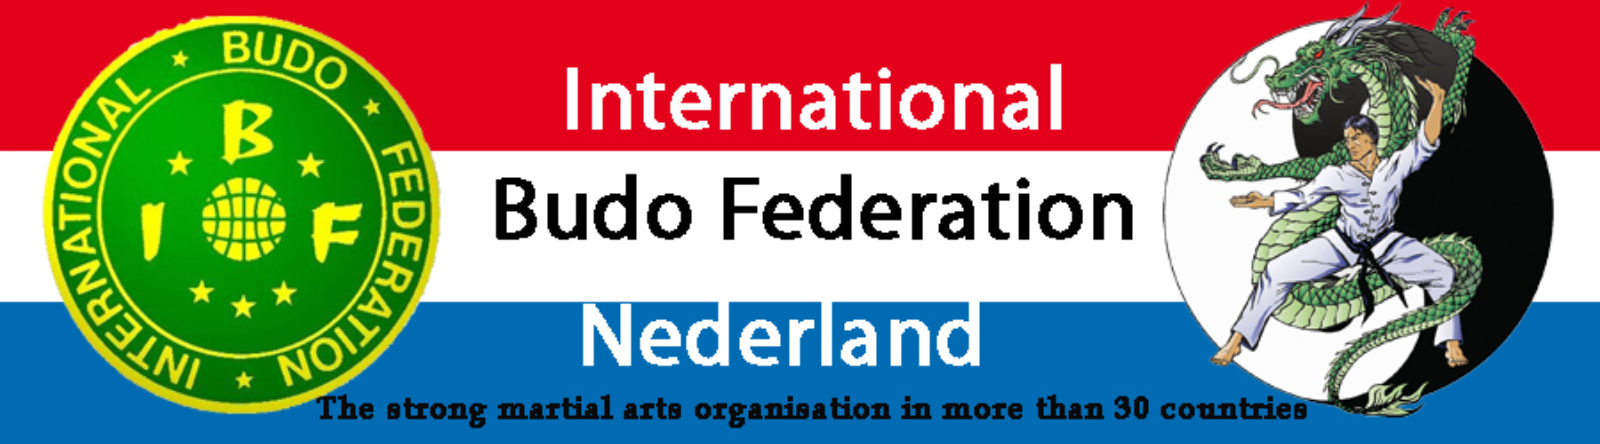 Budo Sport Bond Nederlandse & Europa Erkenning